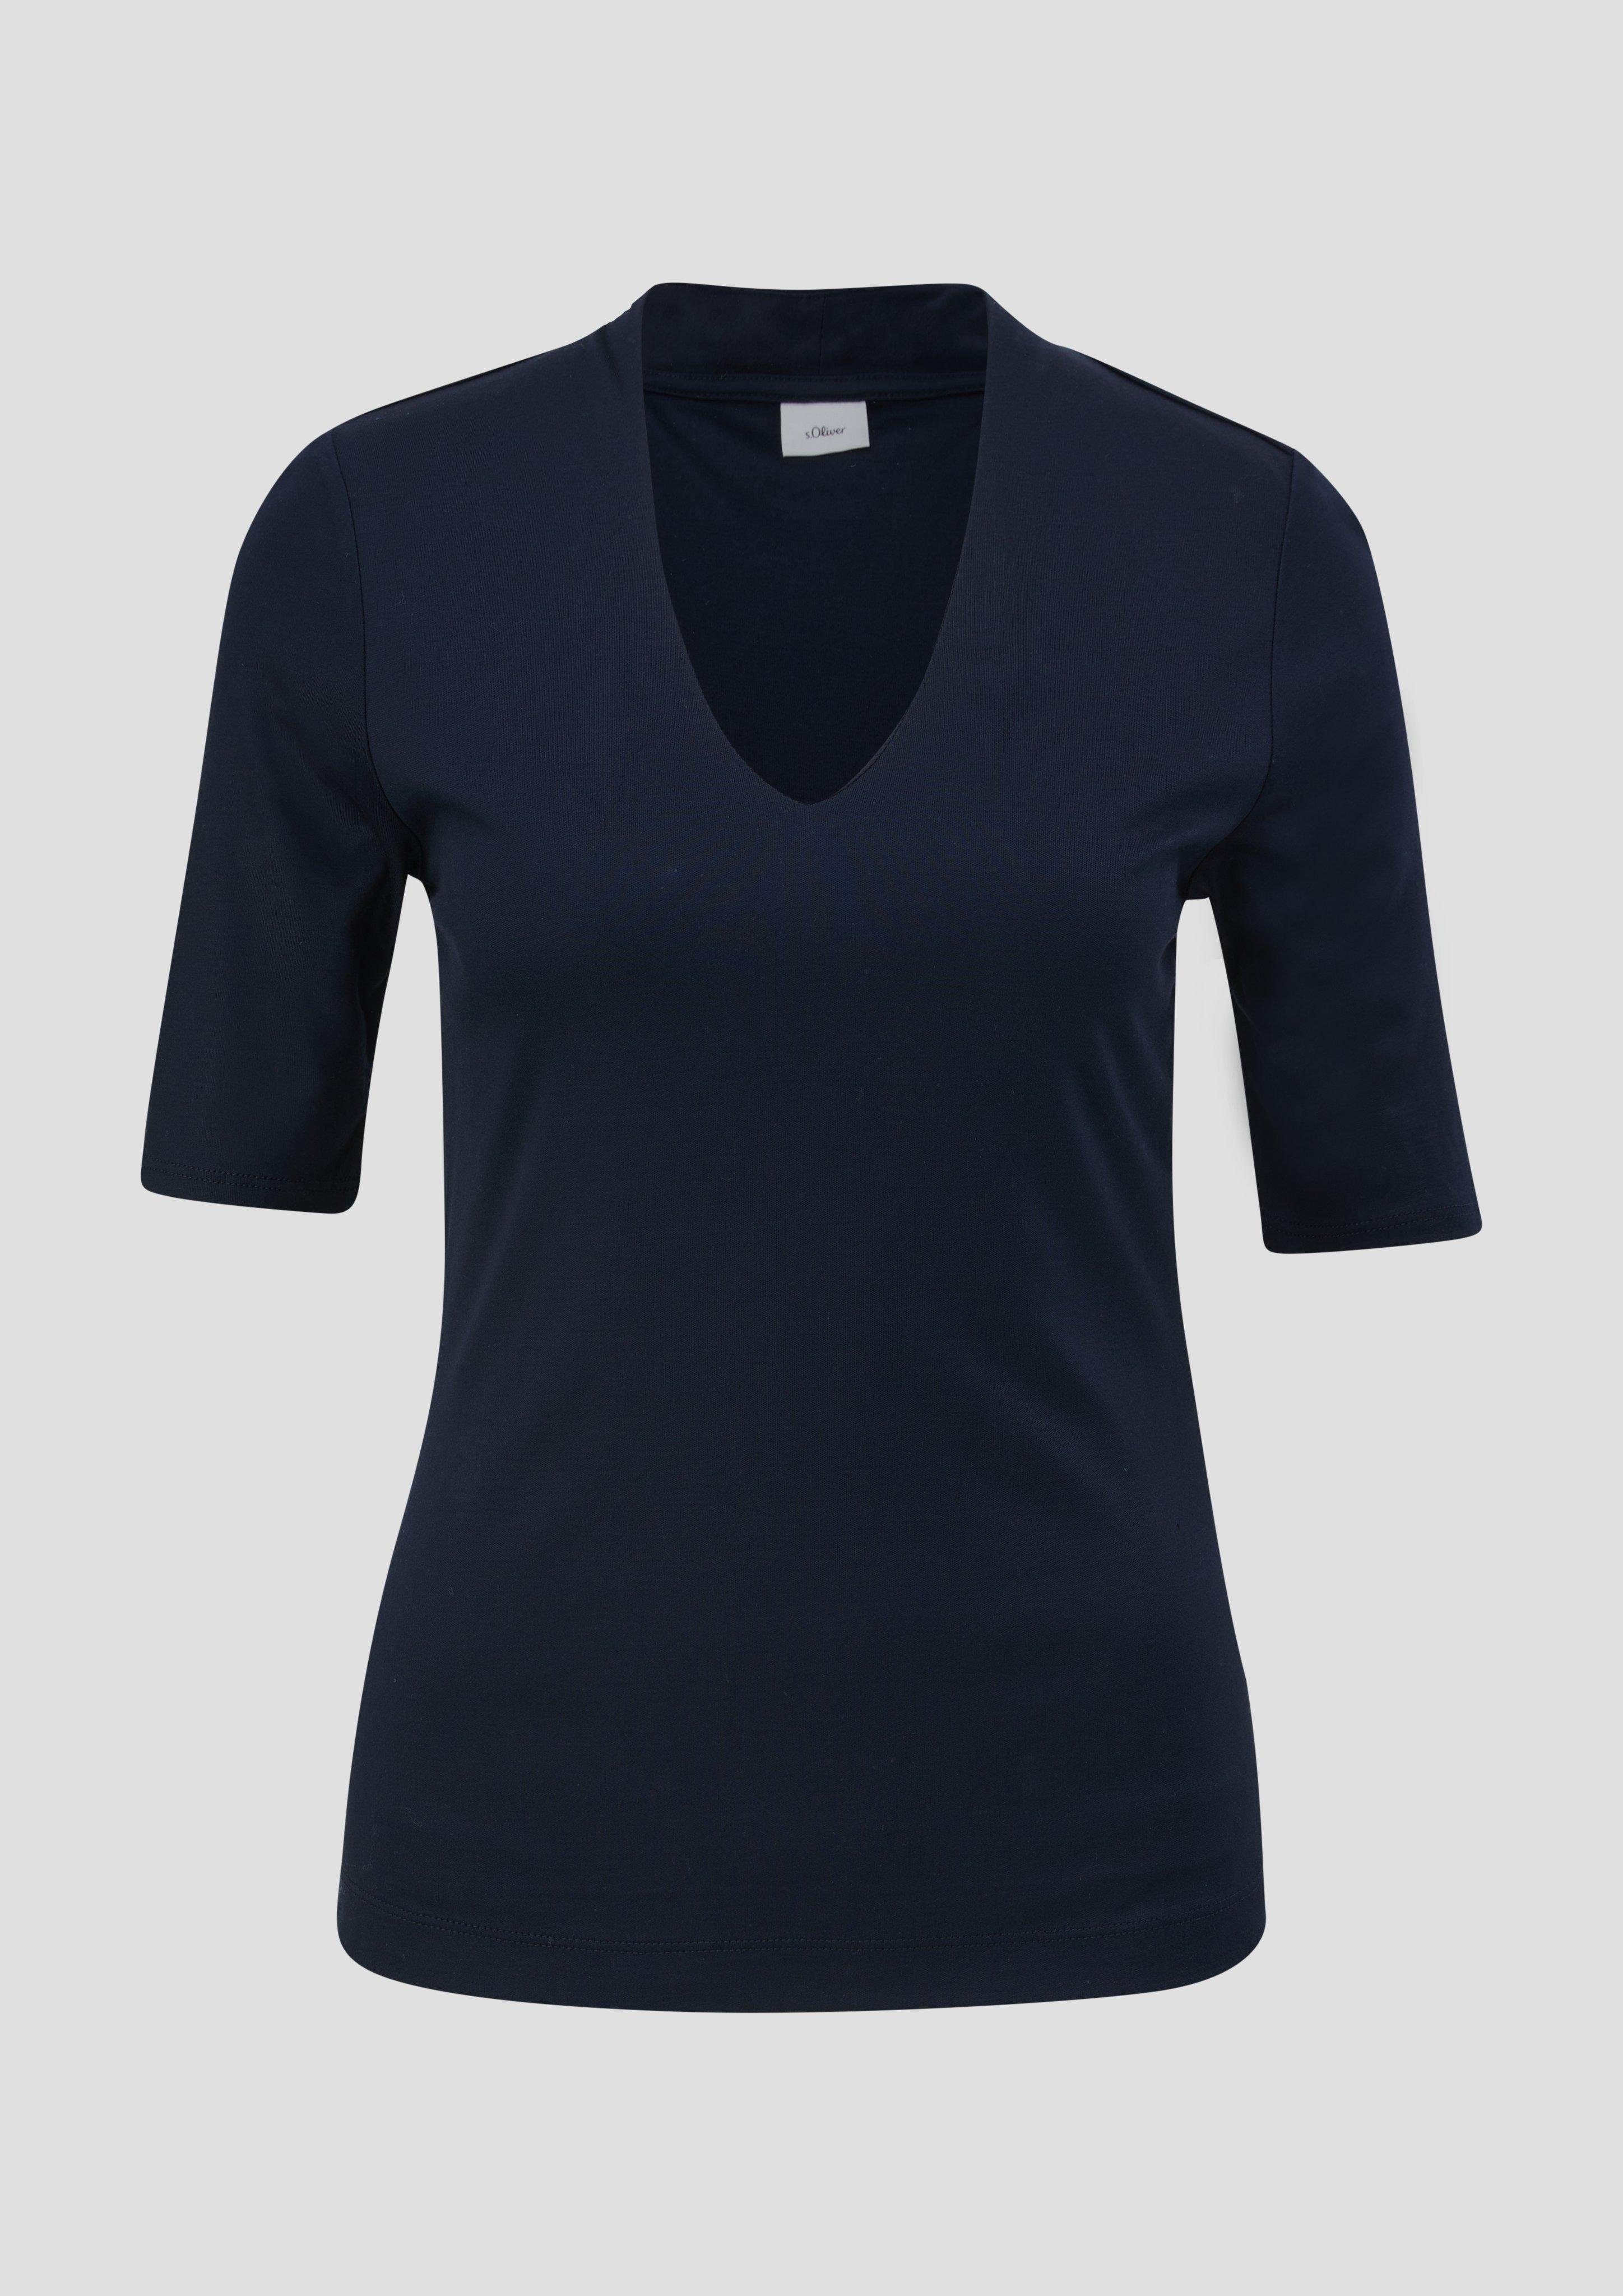 BLACK V-Ausschnitt marineblau dunkles Kurzarmshirt LABEL T-Shirt Raffung s.Oliver mit